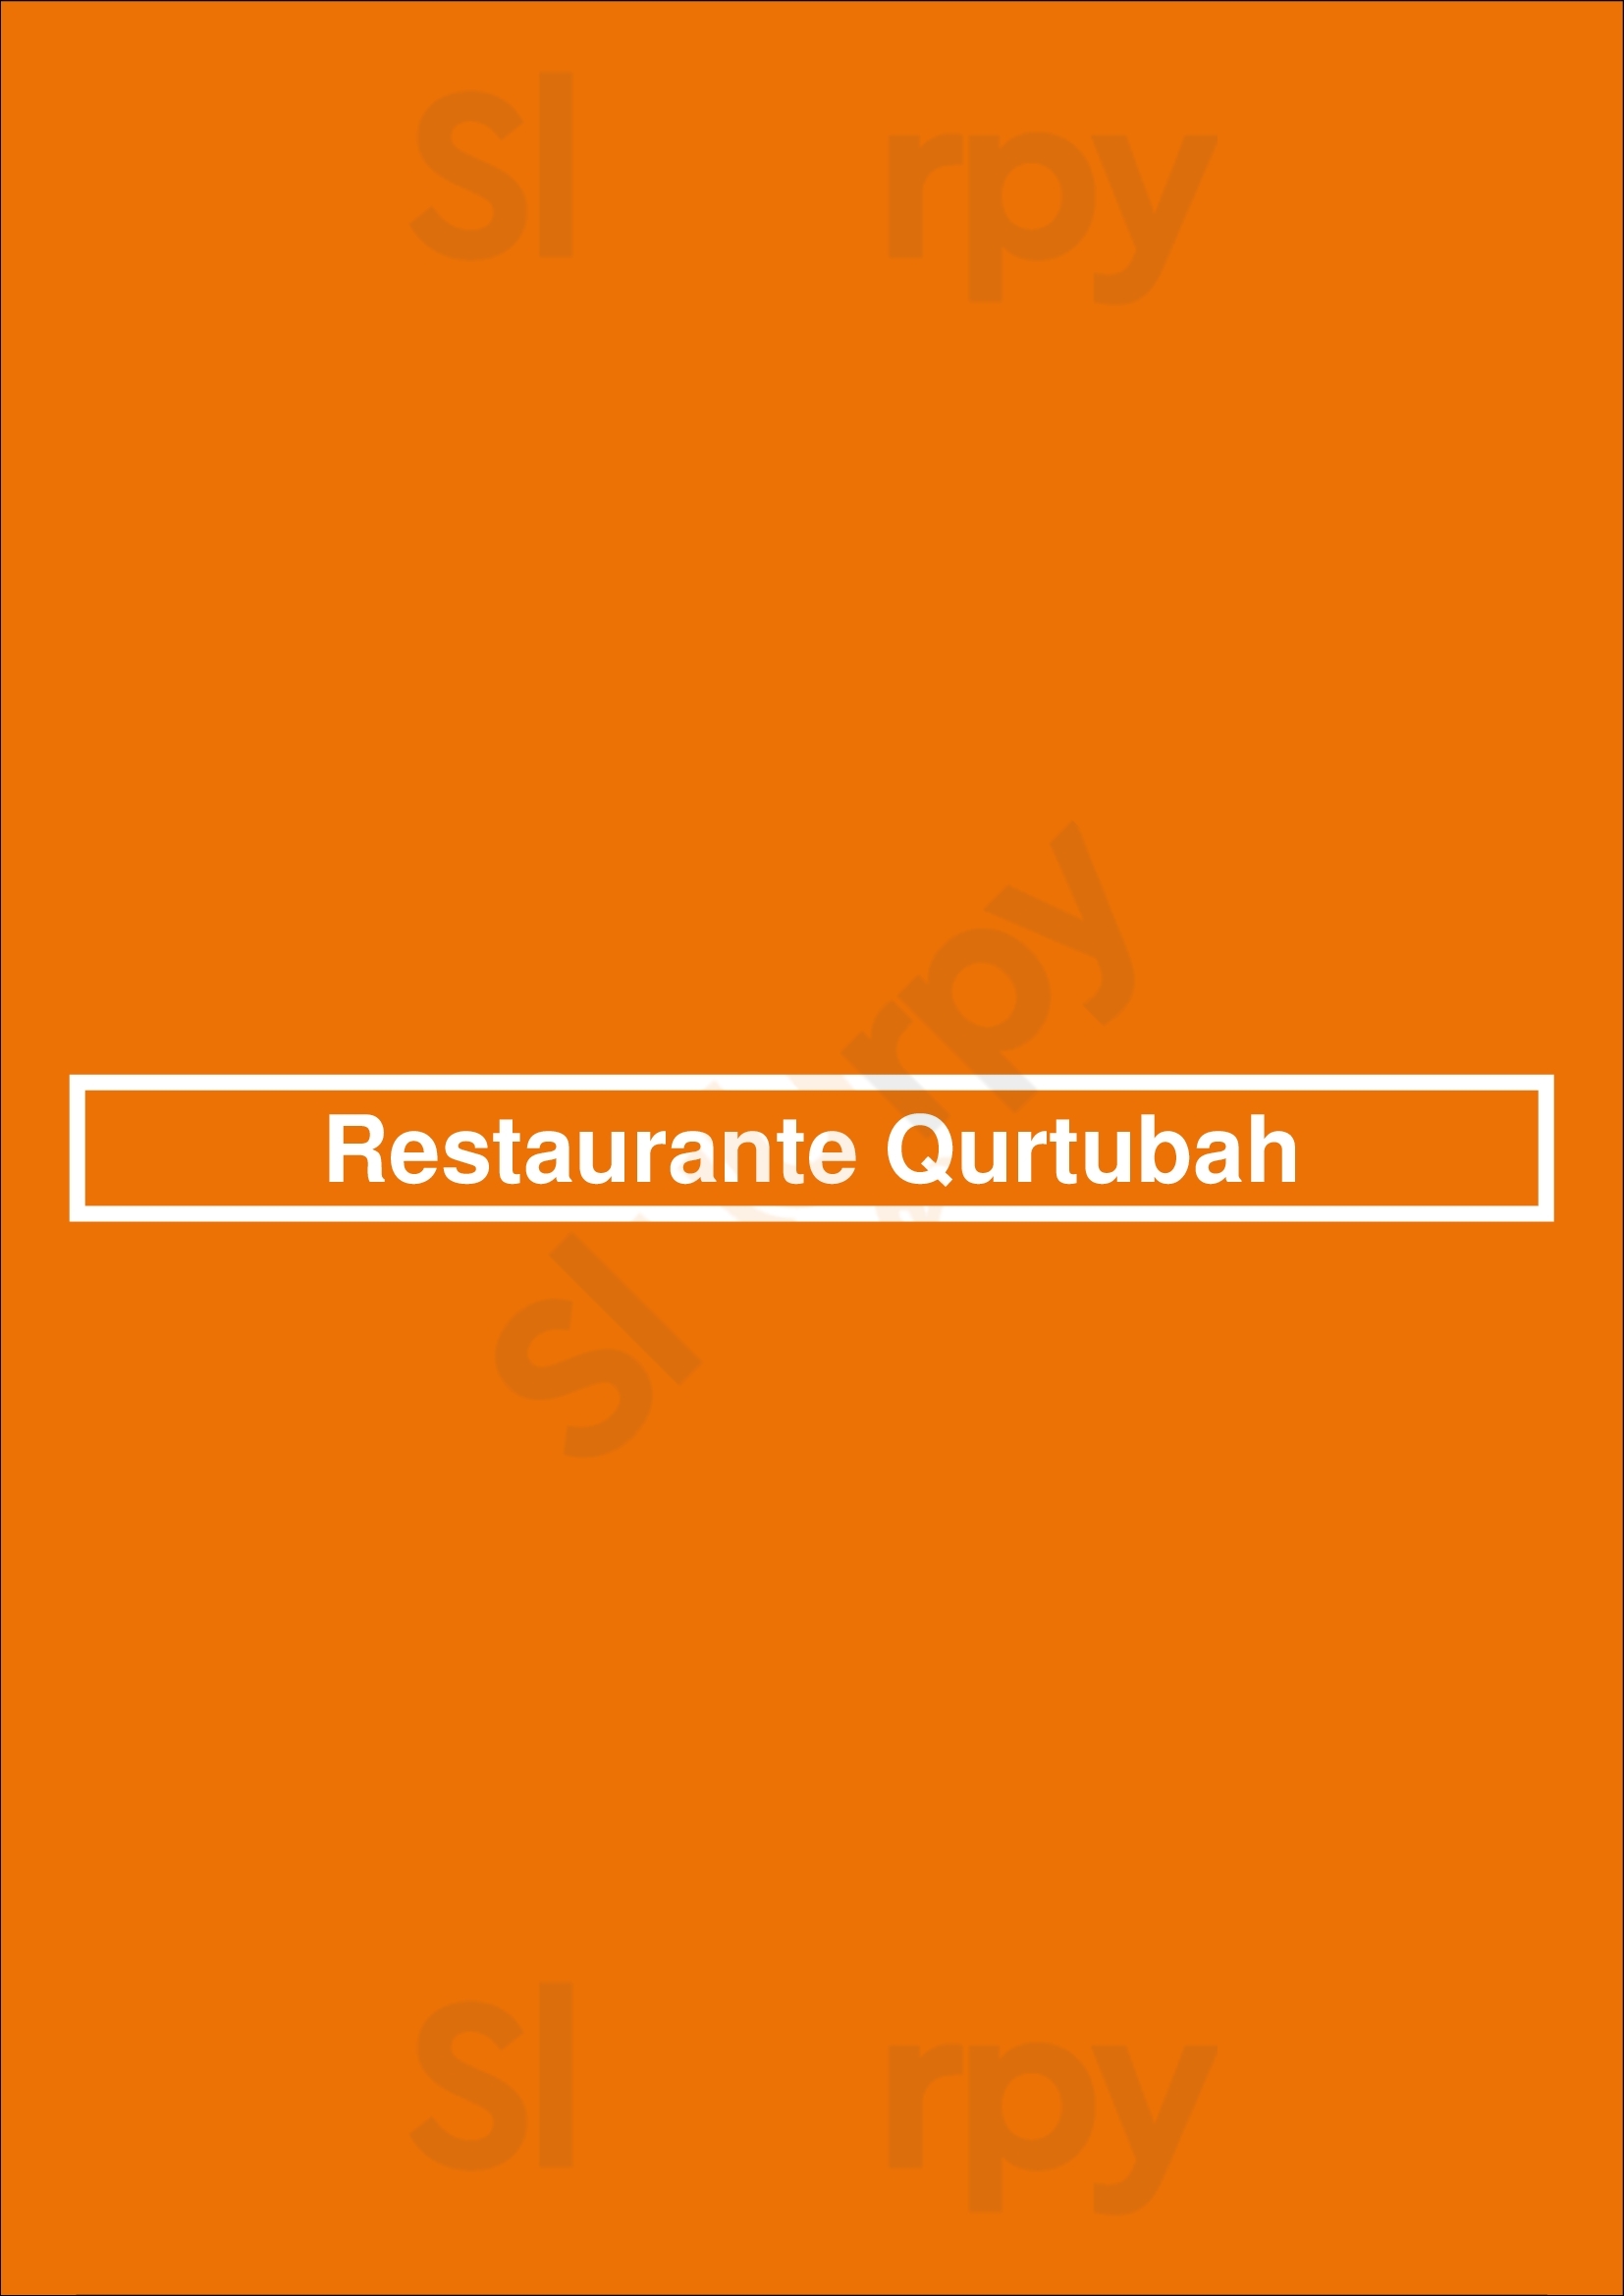 Restaurante Qurtubah Córdoba Menu - 1